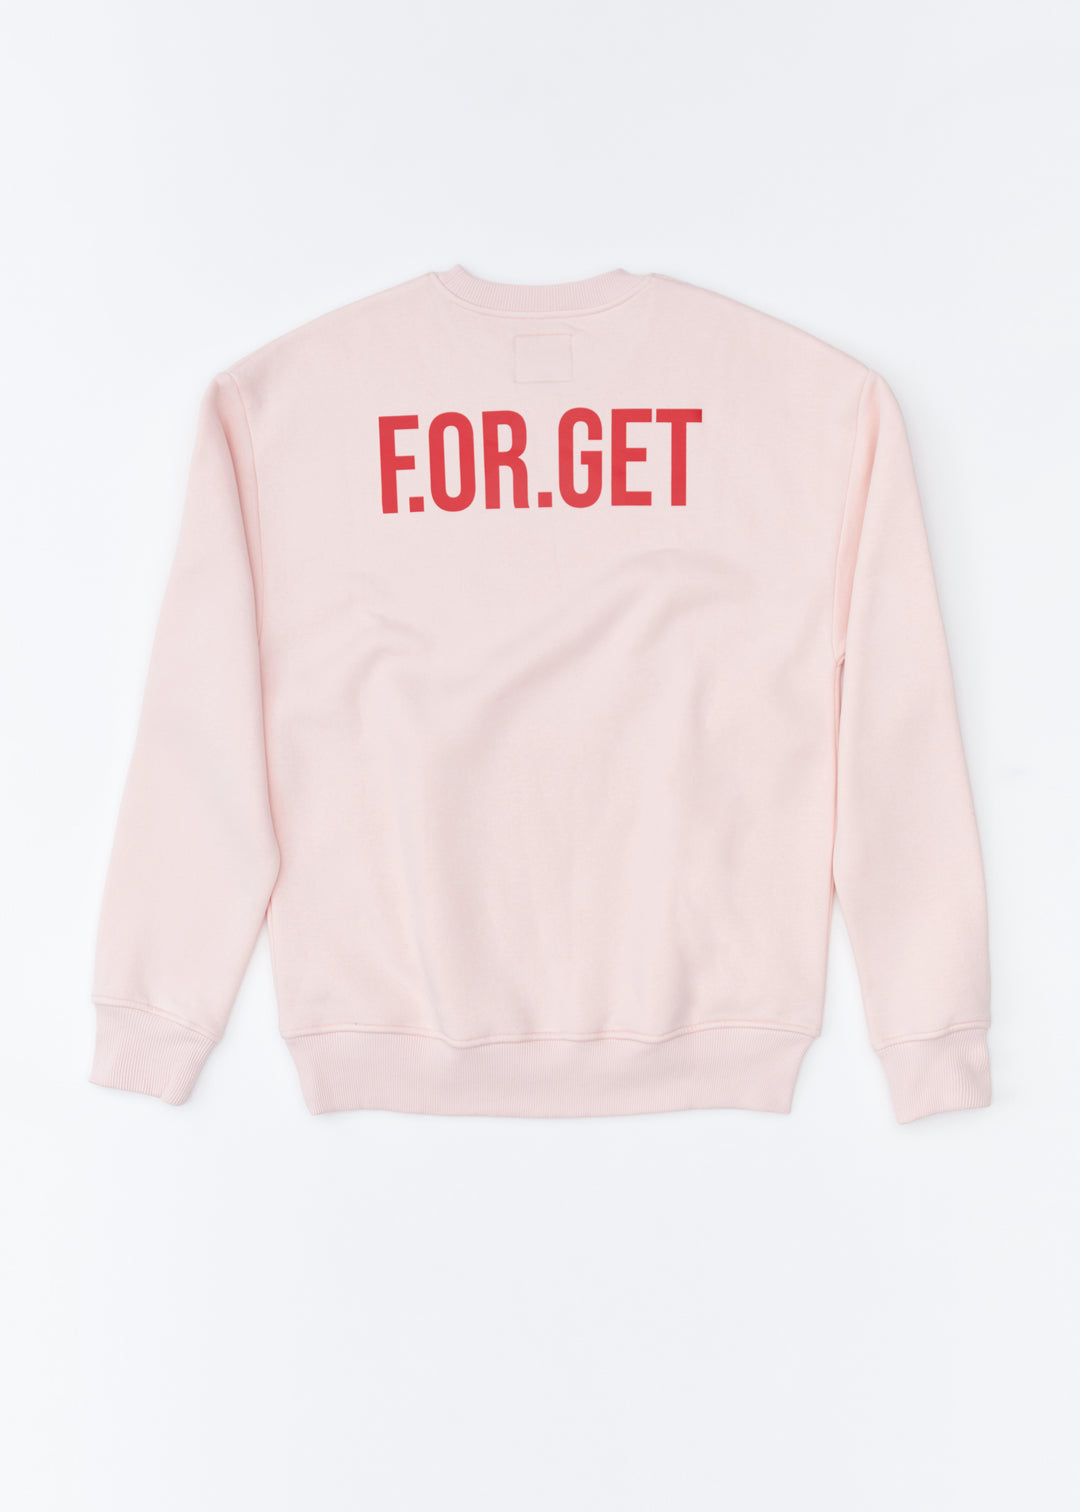 Forget / Sweatshirt